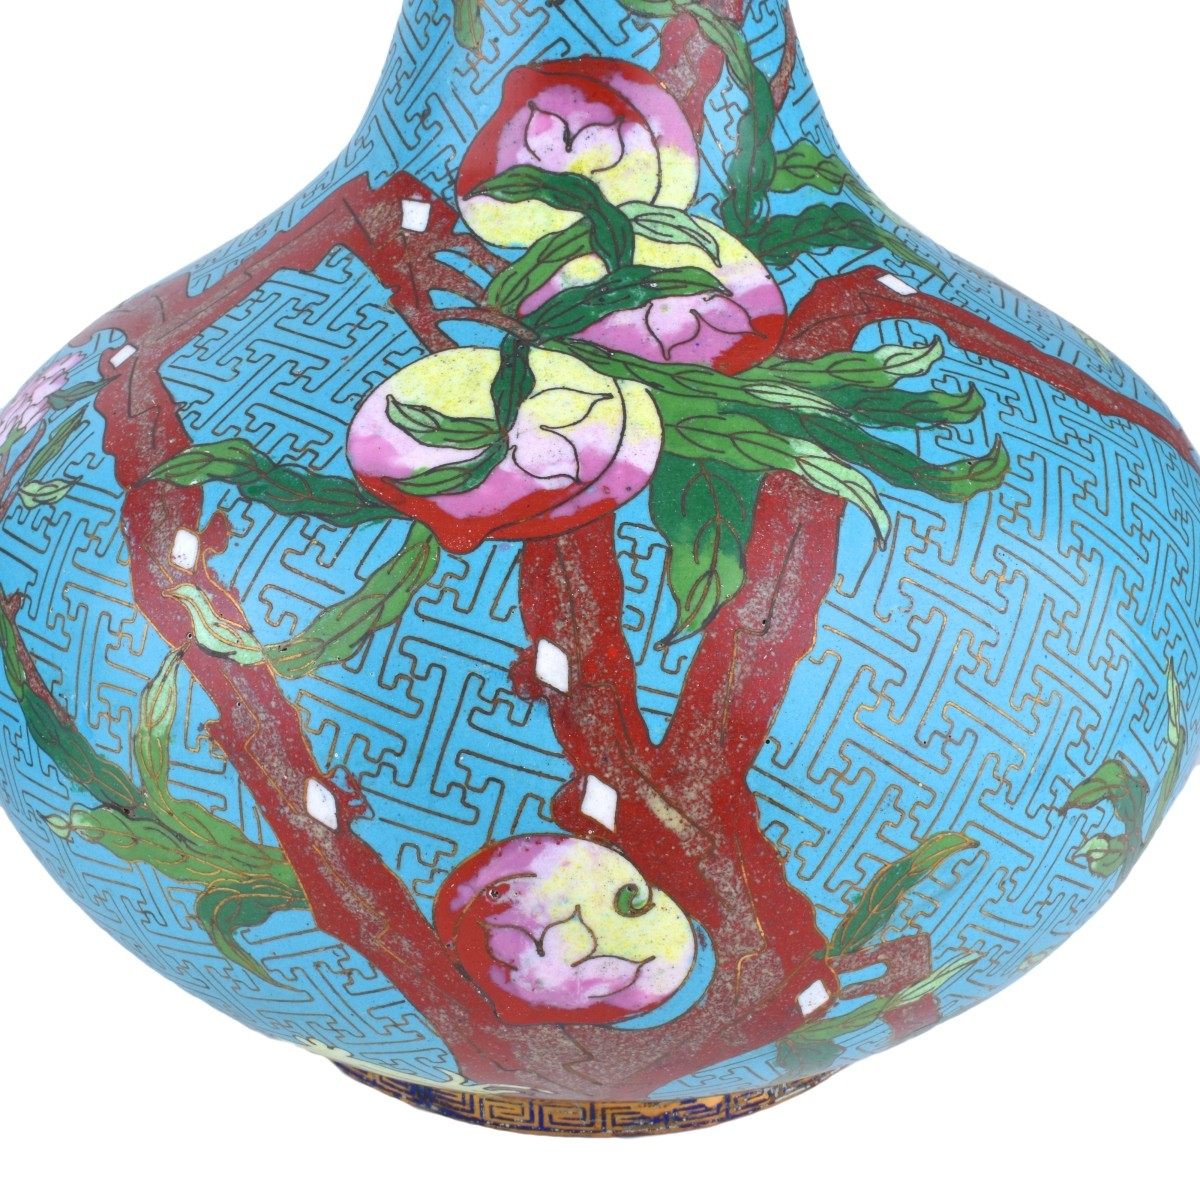 Large Pair of Chinese Cloisonne Enamel Vases